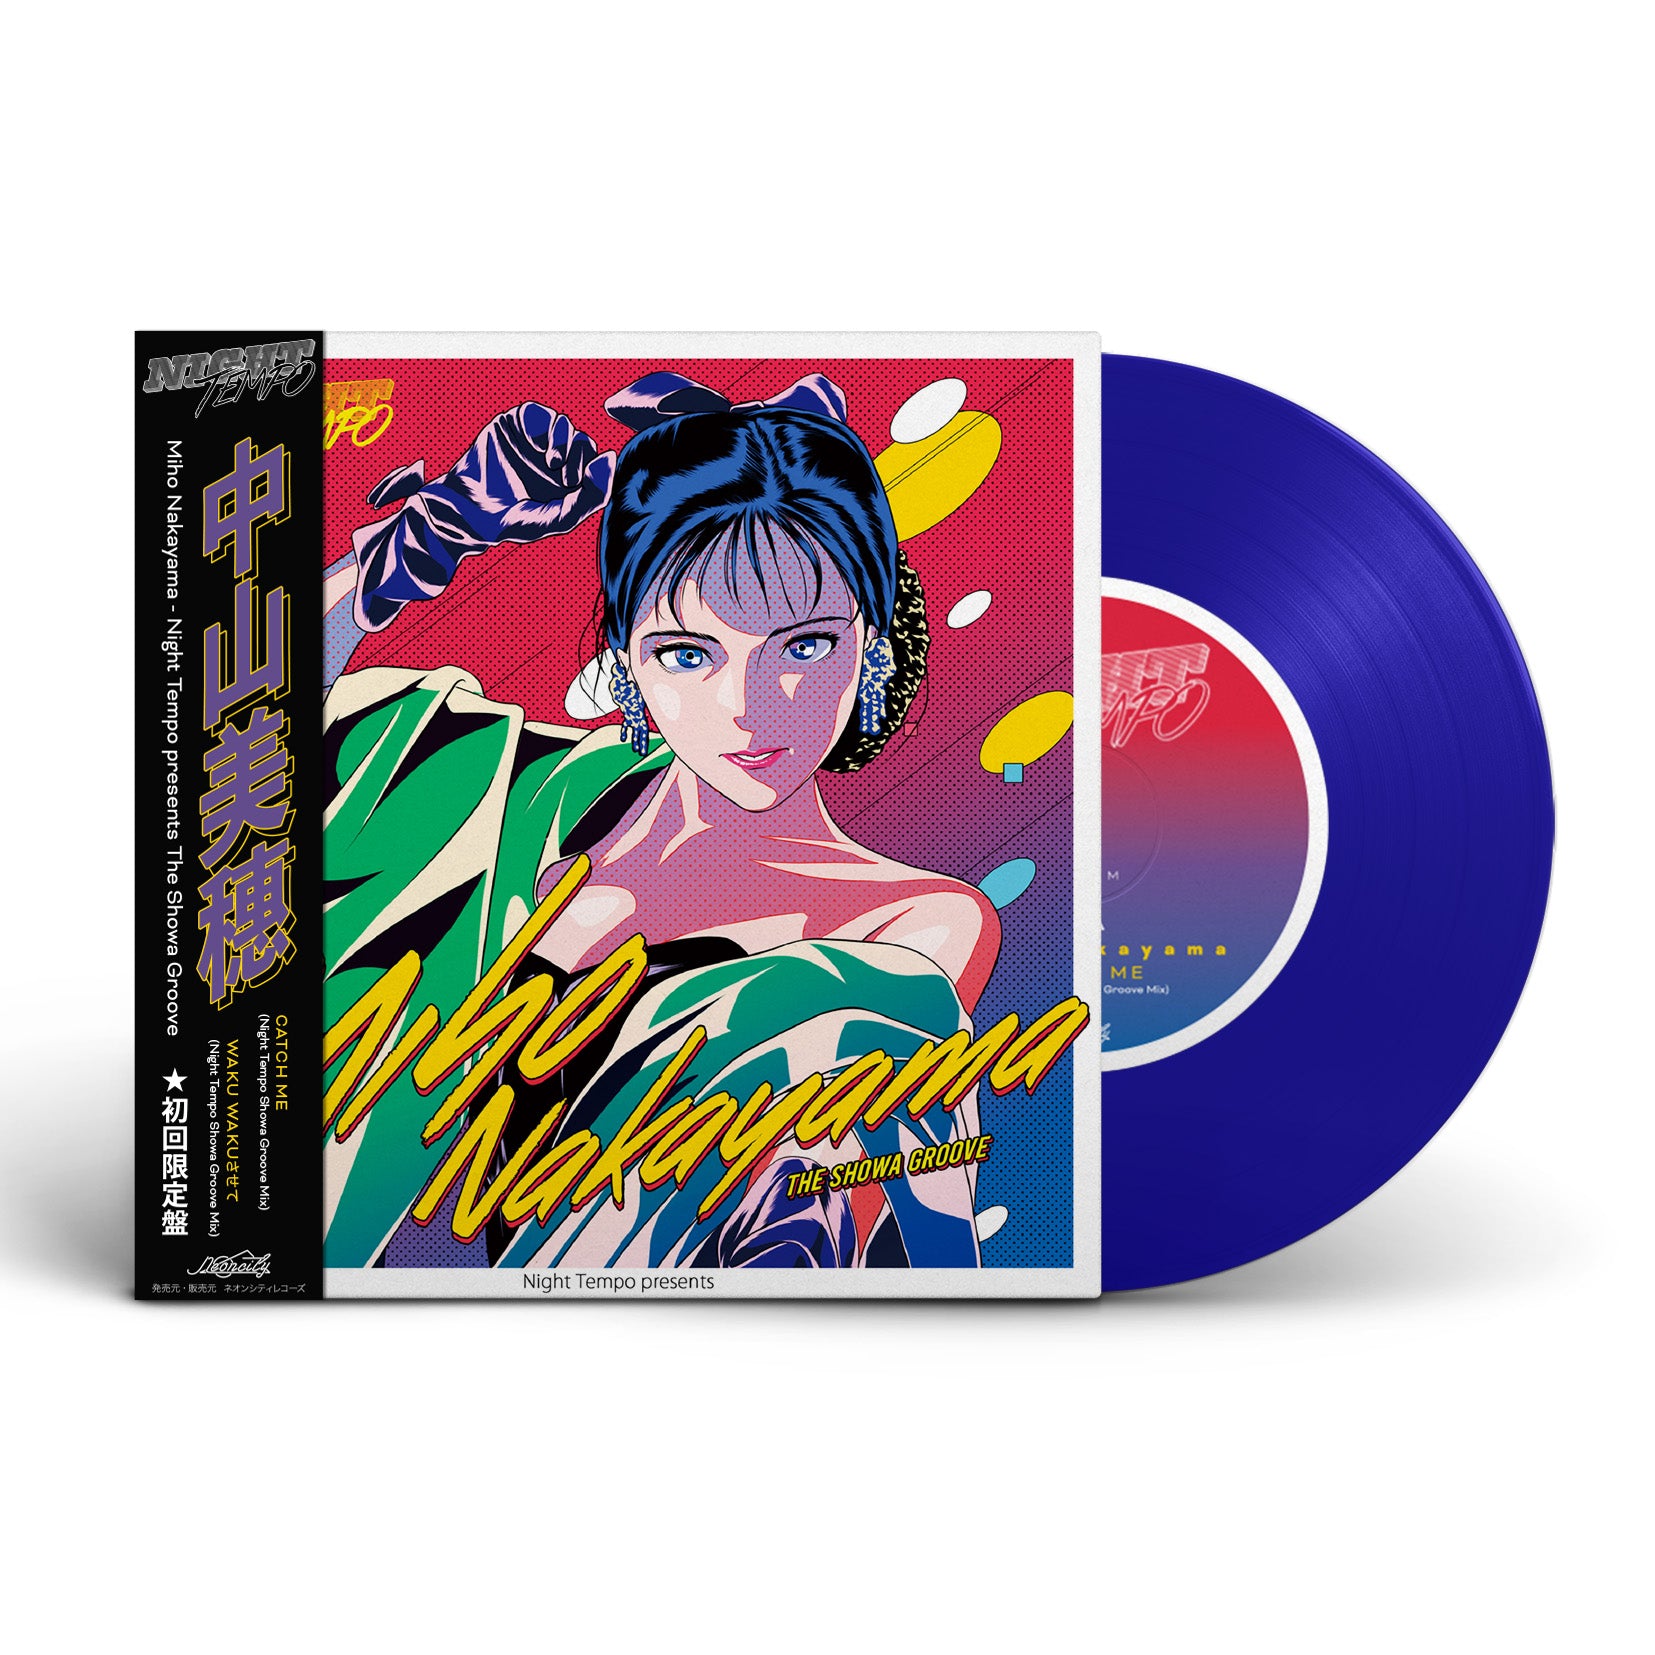 [Pre-order] Miho Nakayama - Night Tempo presents The Showa Groove 7” Vinyl - Neoncity Records